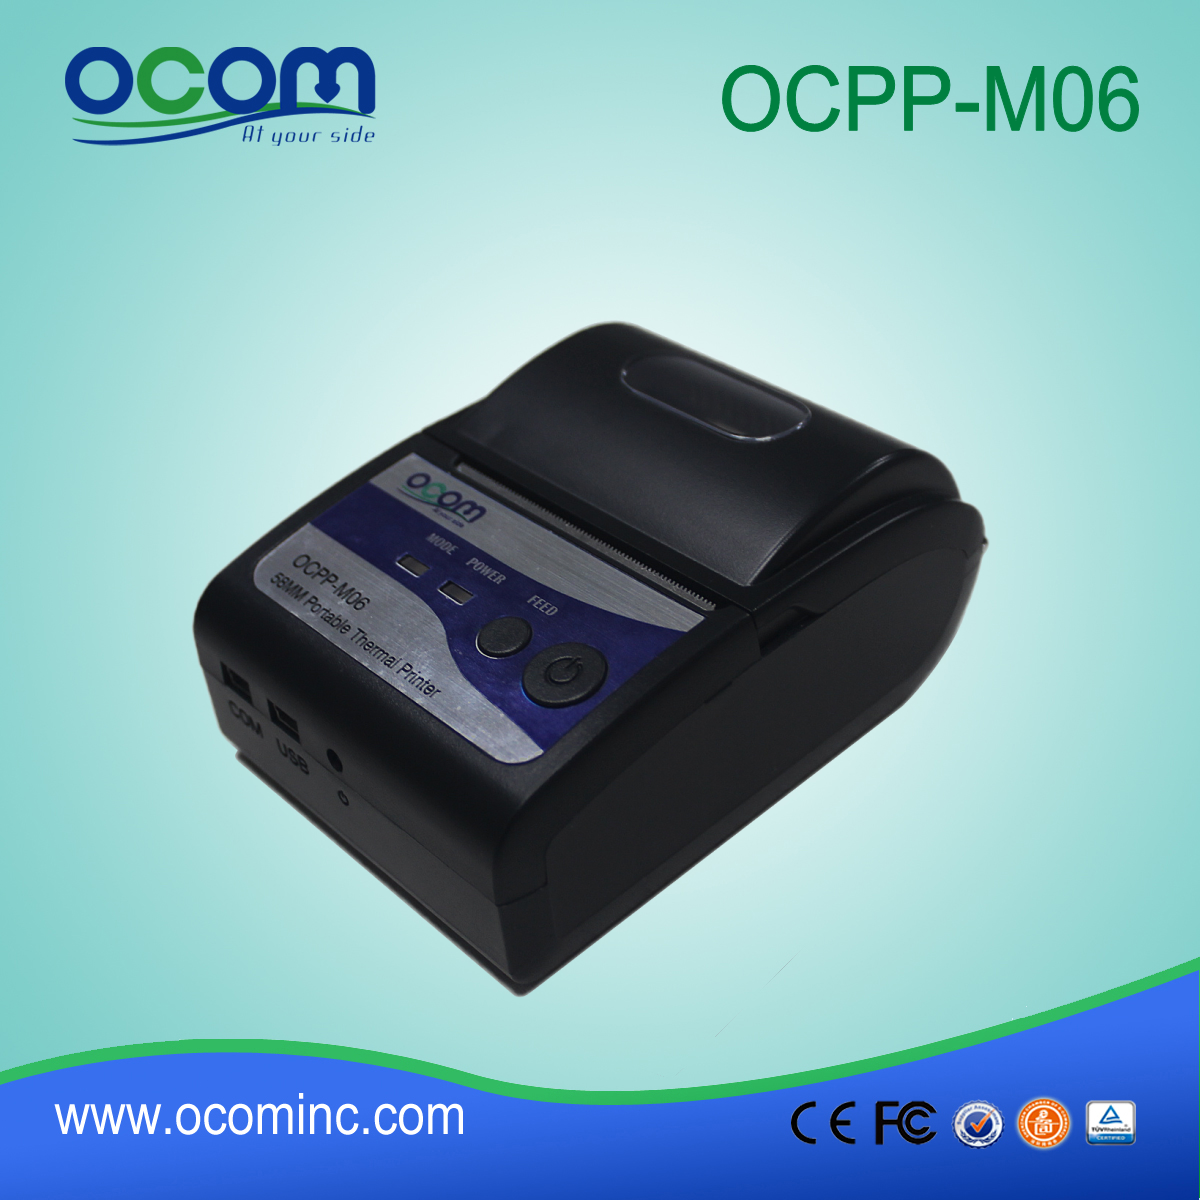 (OCPP-M06) Venta impresora portátil android OCOM 2015 caliente, impresora portátil bluetooth